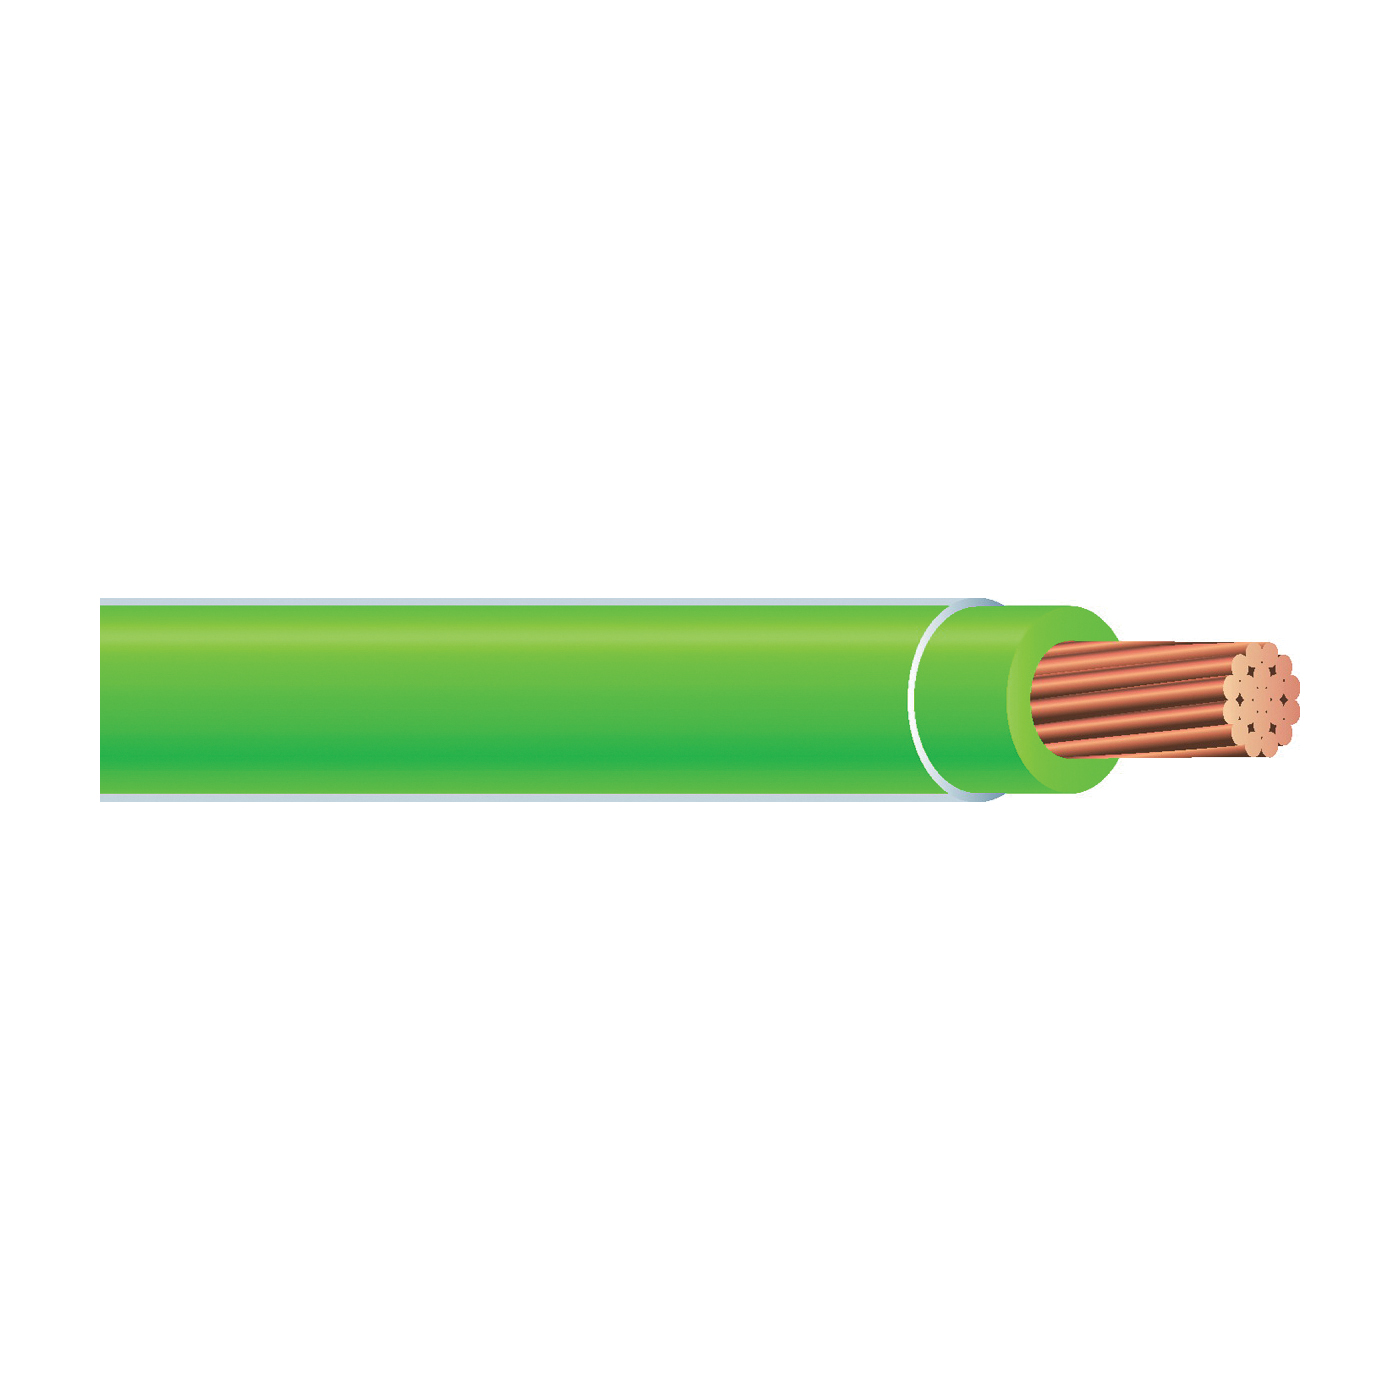 22968252 Building Wire, 12 AWG Wire, 100 ft L, Copper Conductor, PVC Insulation, Nylon Sheath, Green Sheath